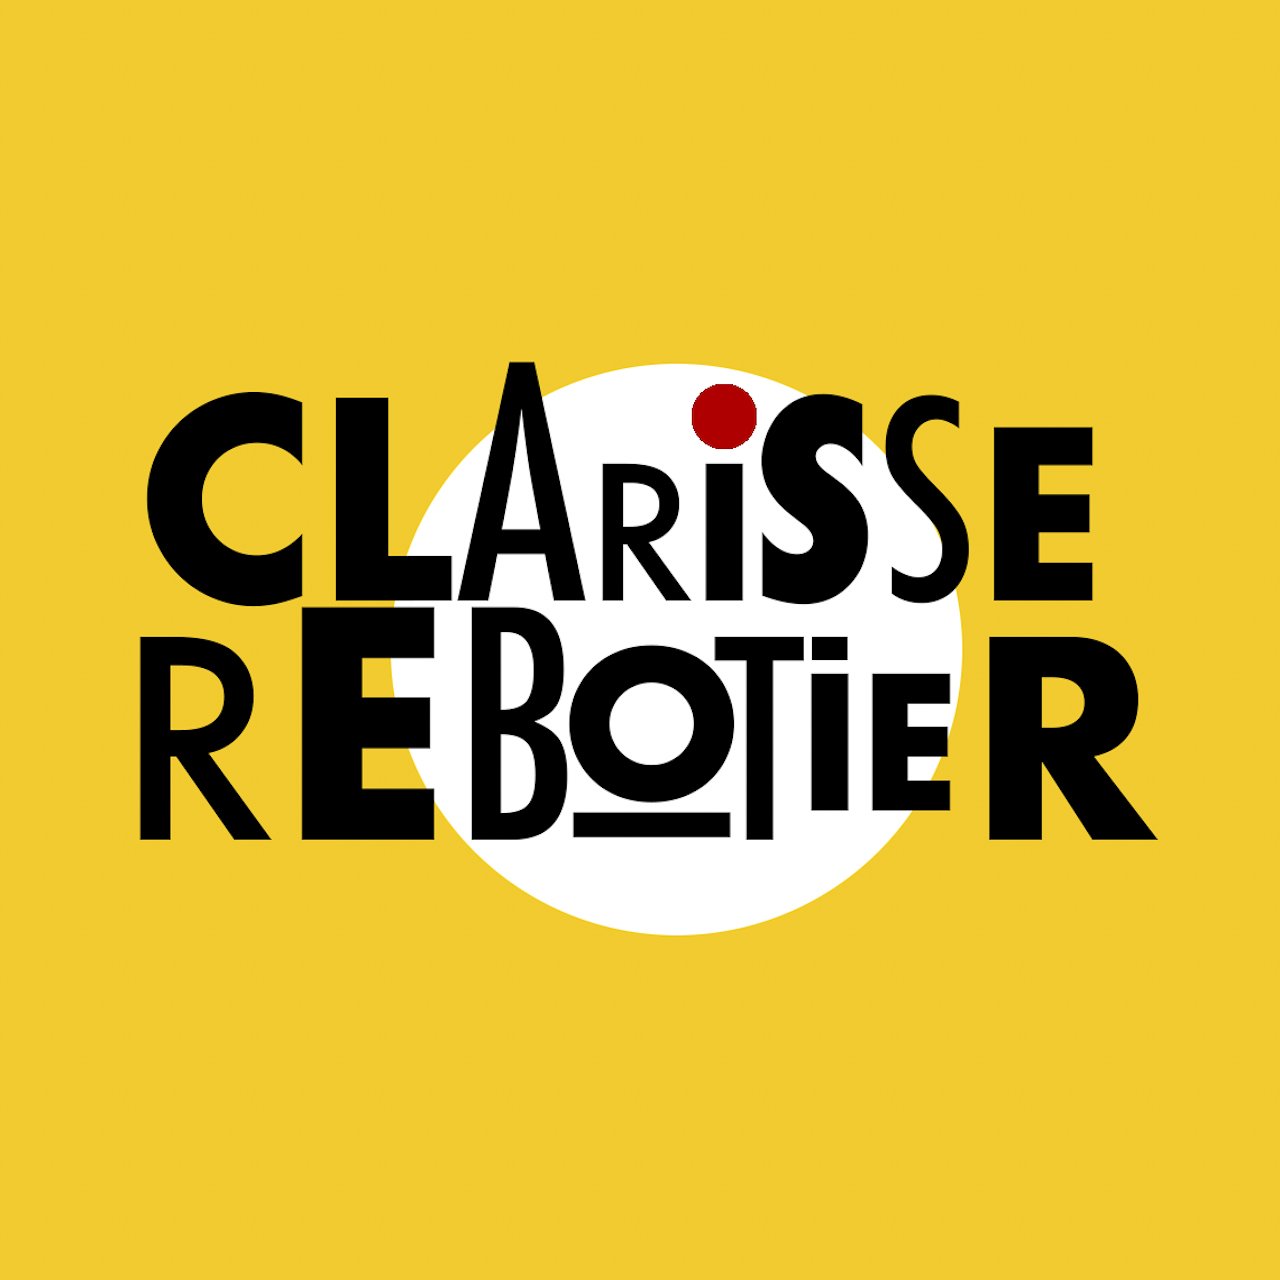 Clarisse Rebotier